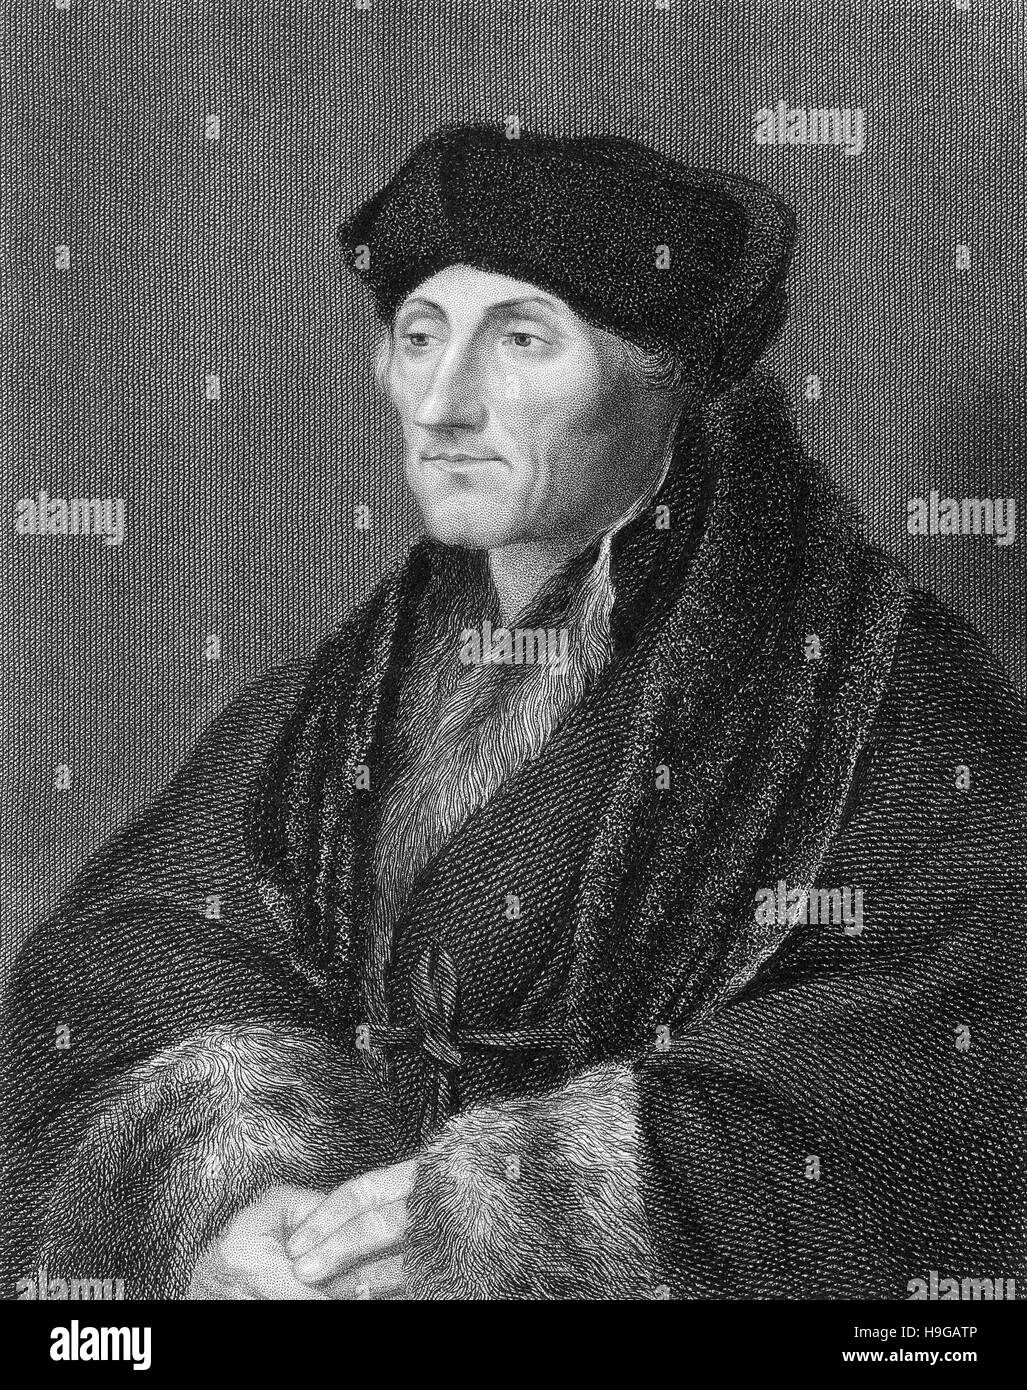 Erasmus Desiderius von Rotterdam, 1465 - 1536, a Dutch humanist, theologian, philosopher, scholar and author, Stock Photo